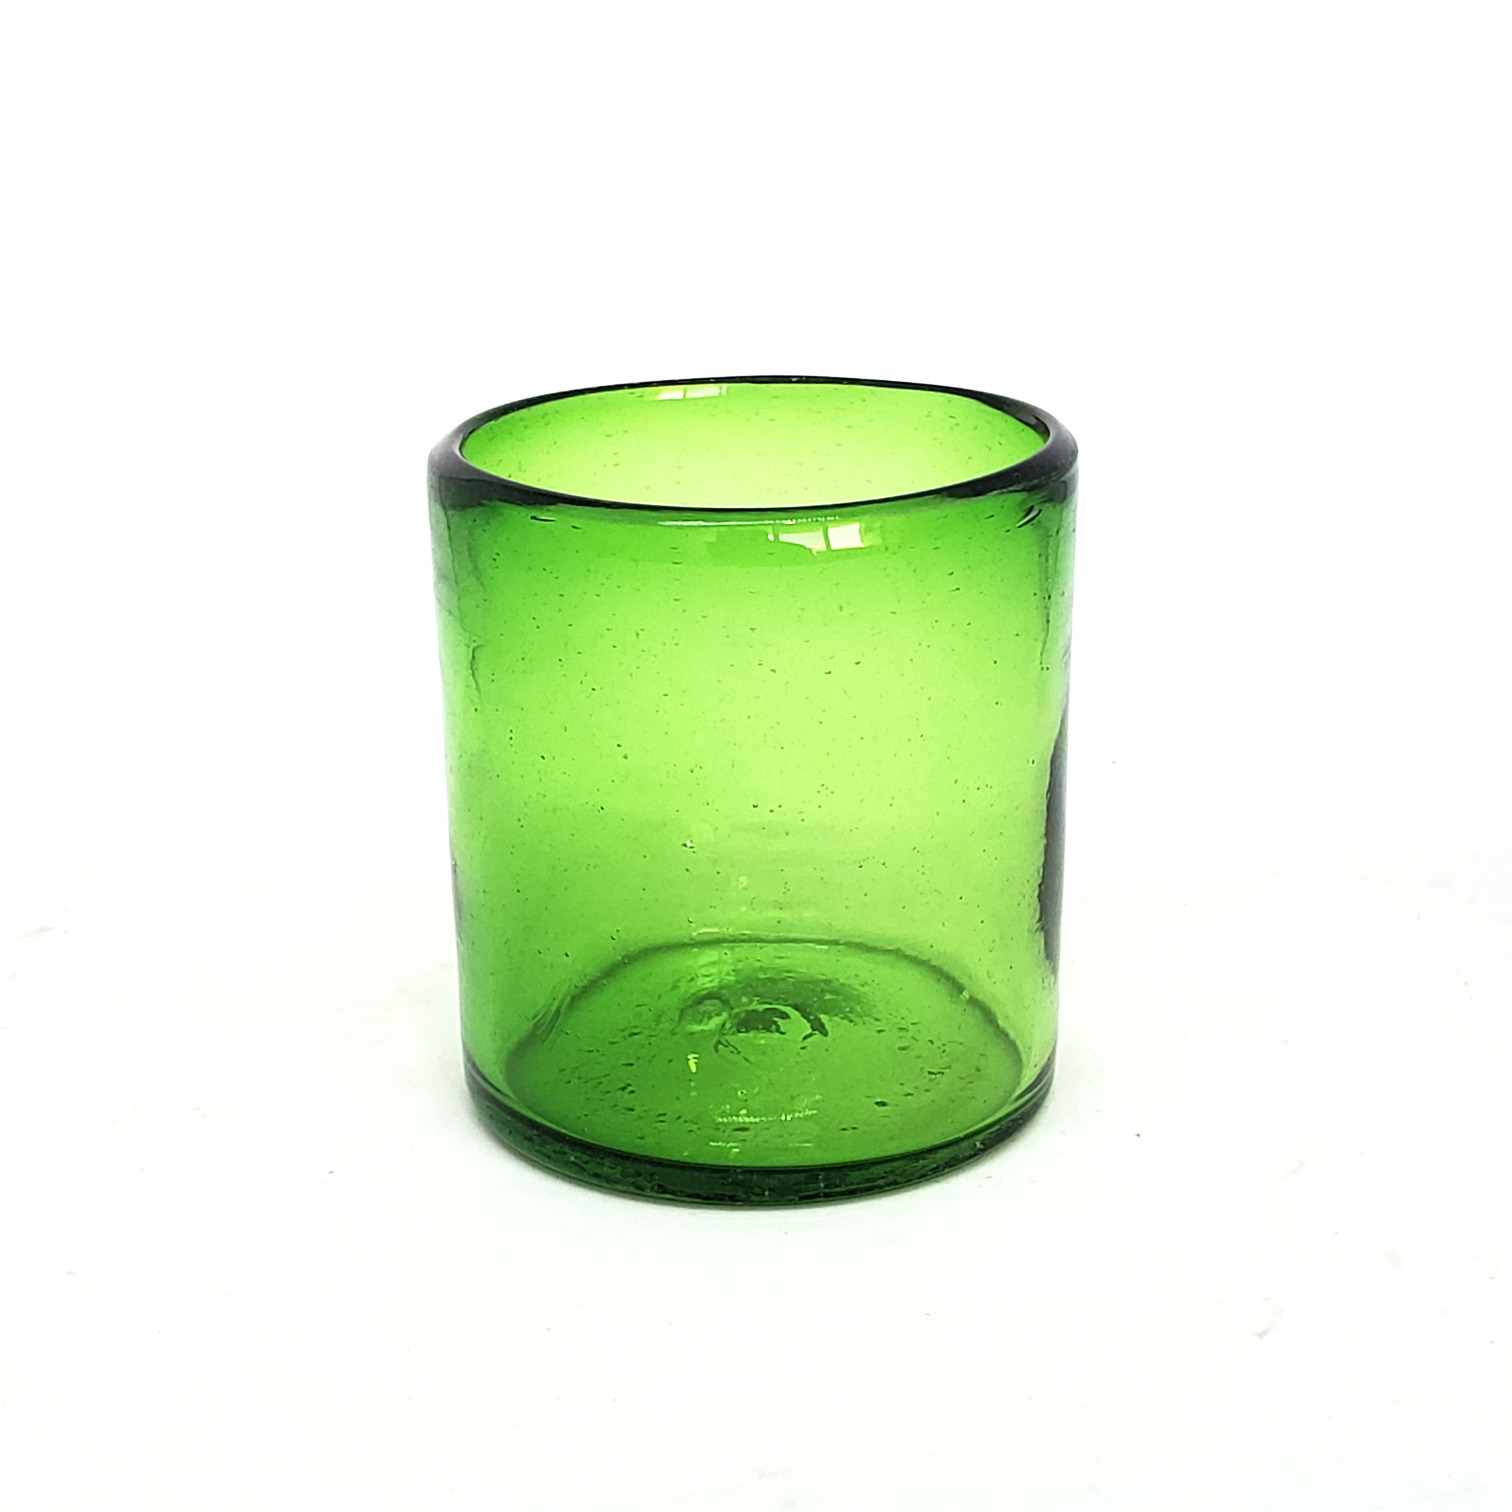 MEXICAN GLASSWARE / Solid Emerald Green 9 oz Short Tumblers (set of 6)